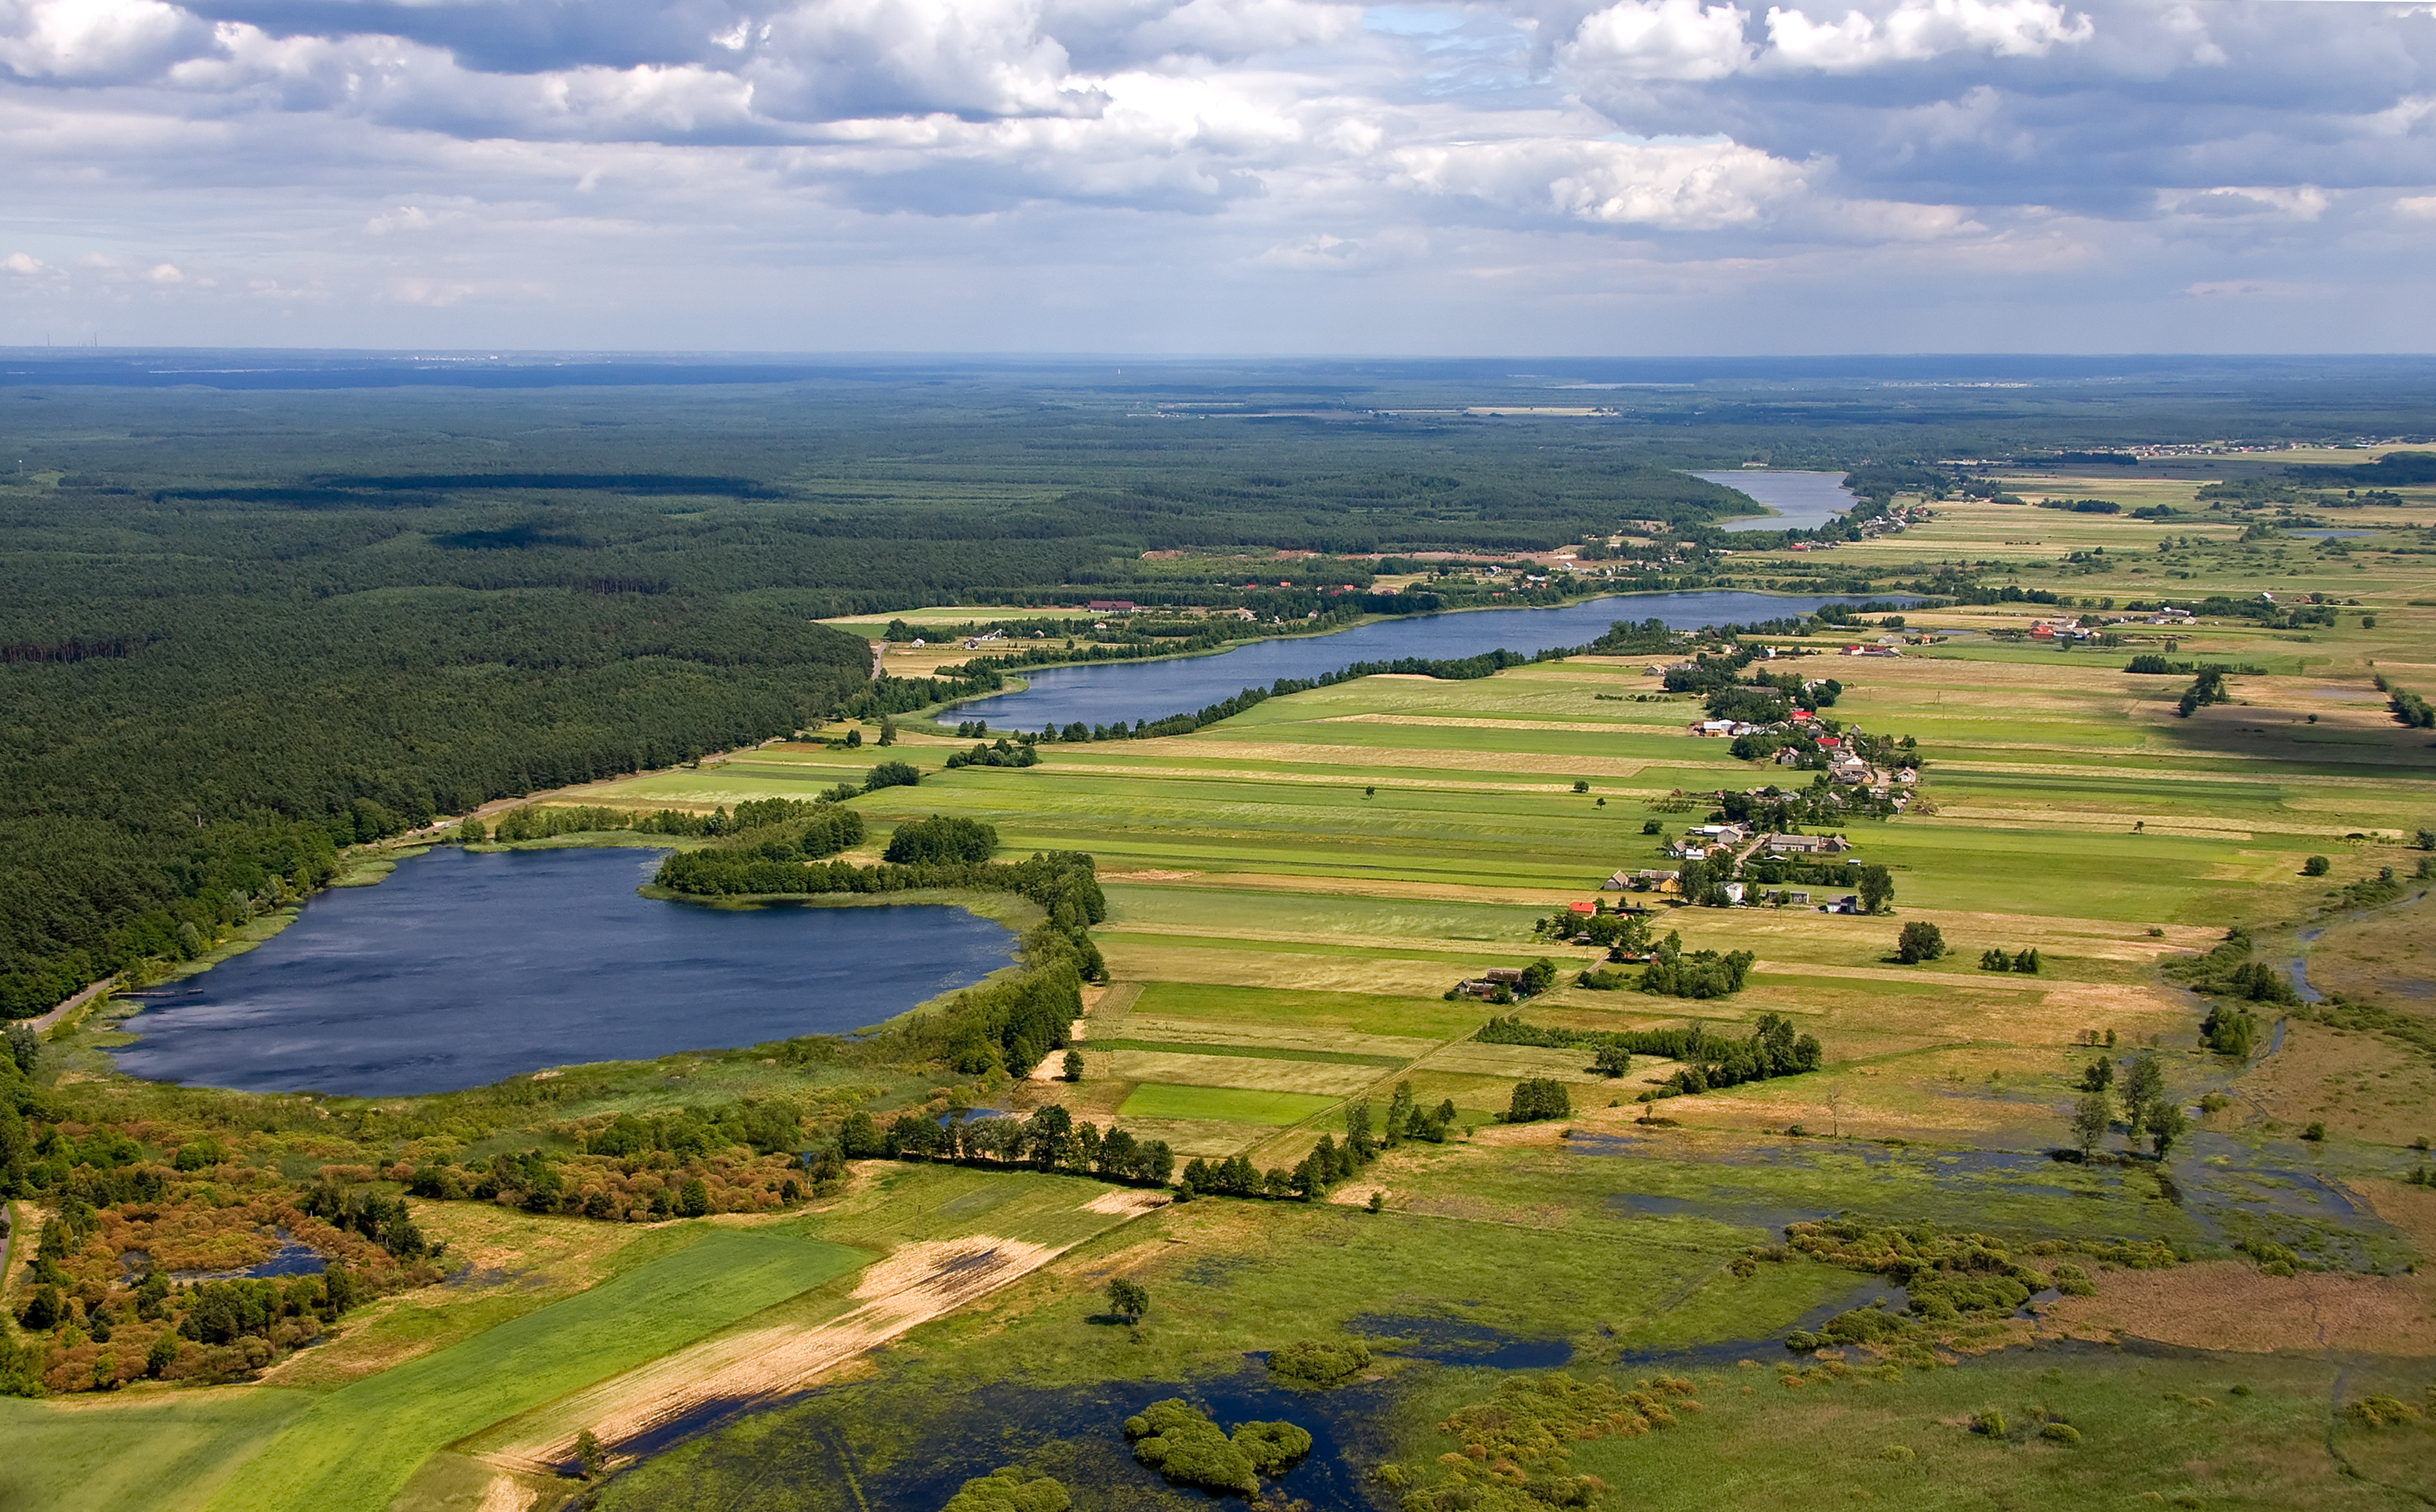 Lake Lubiechowskie and Lake Krzewenckie